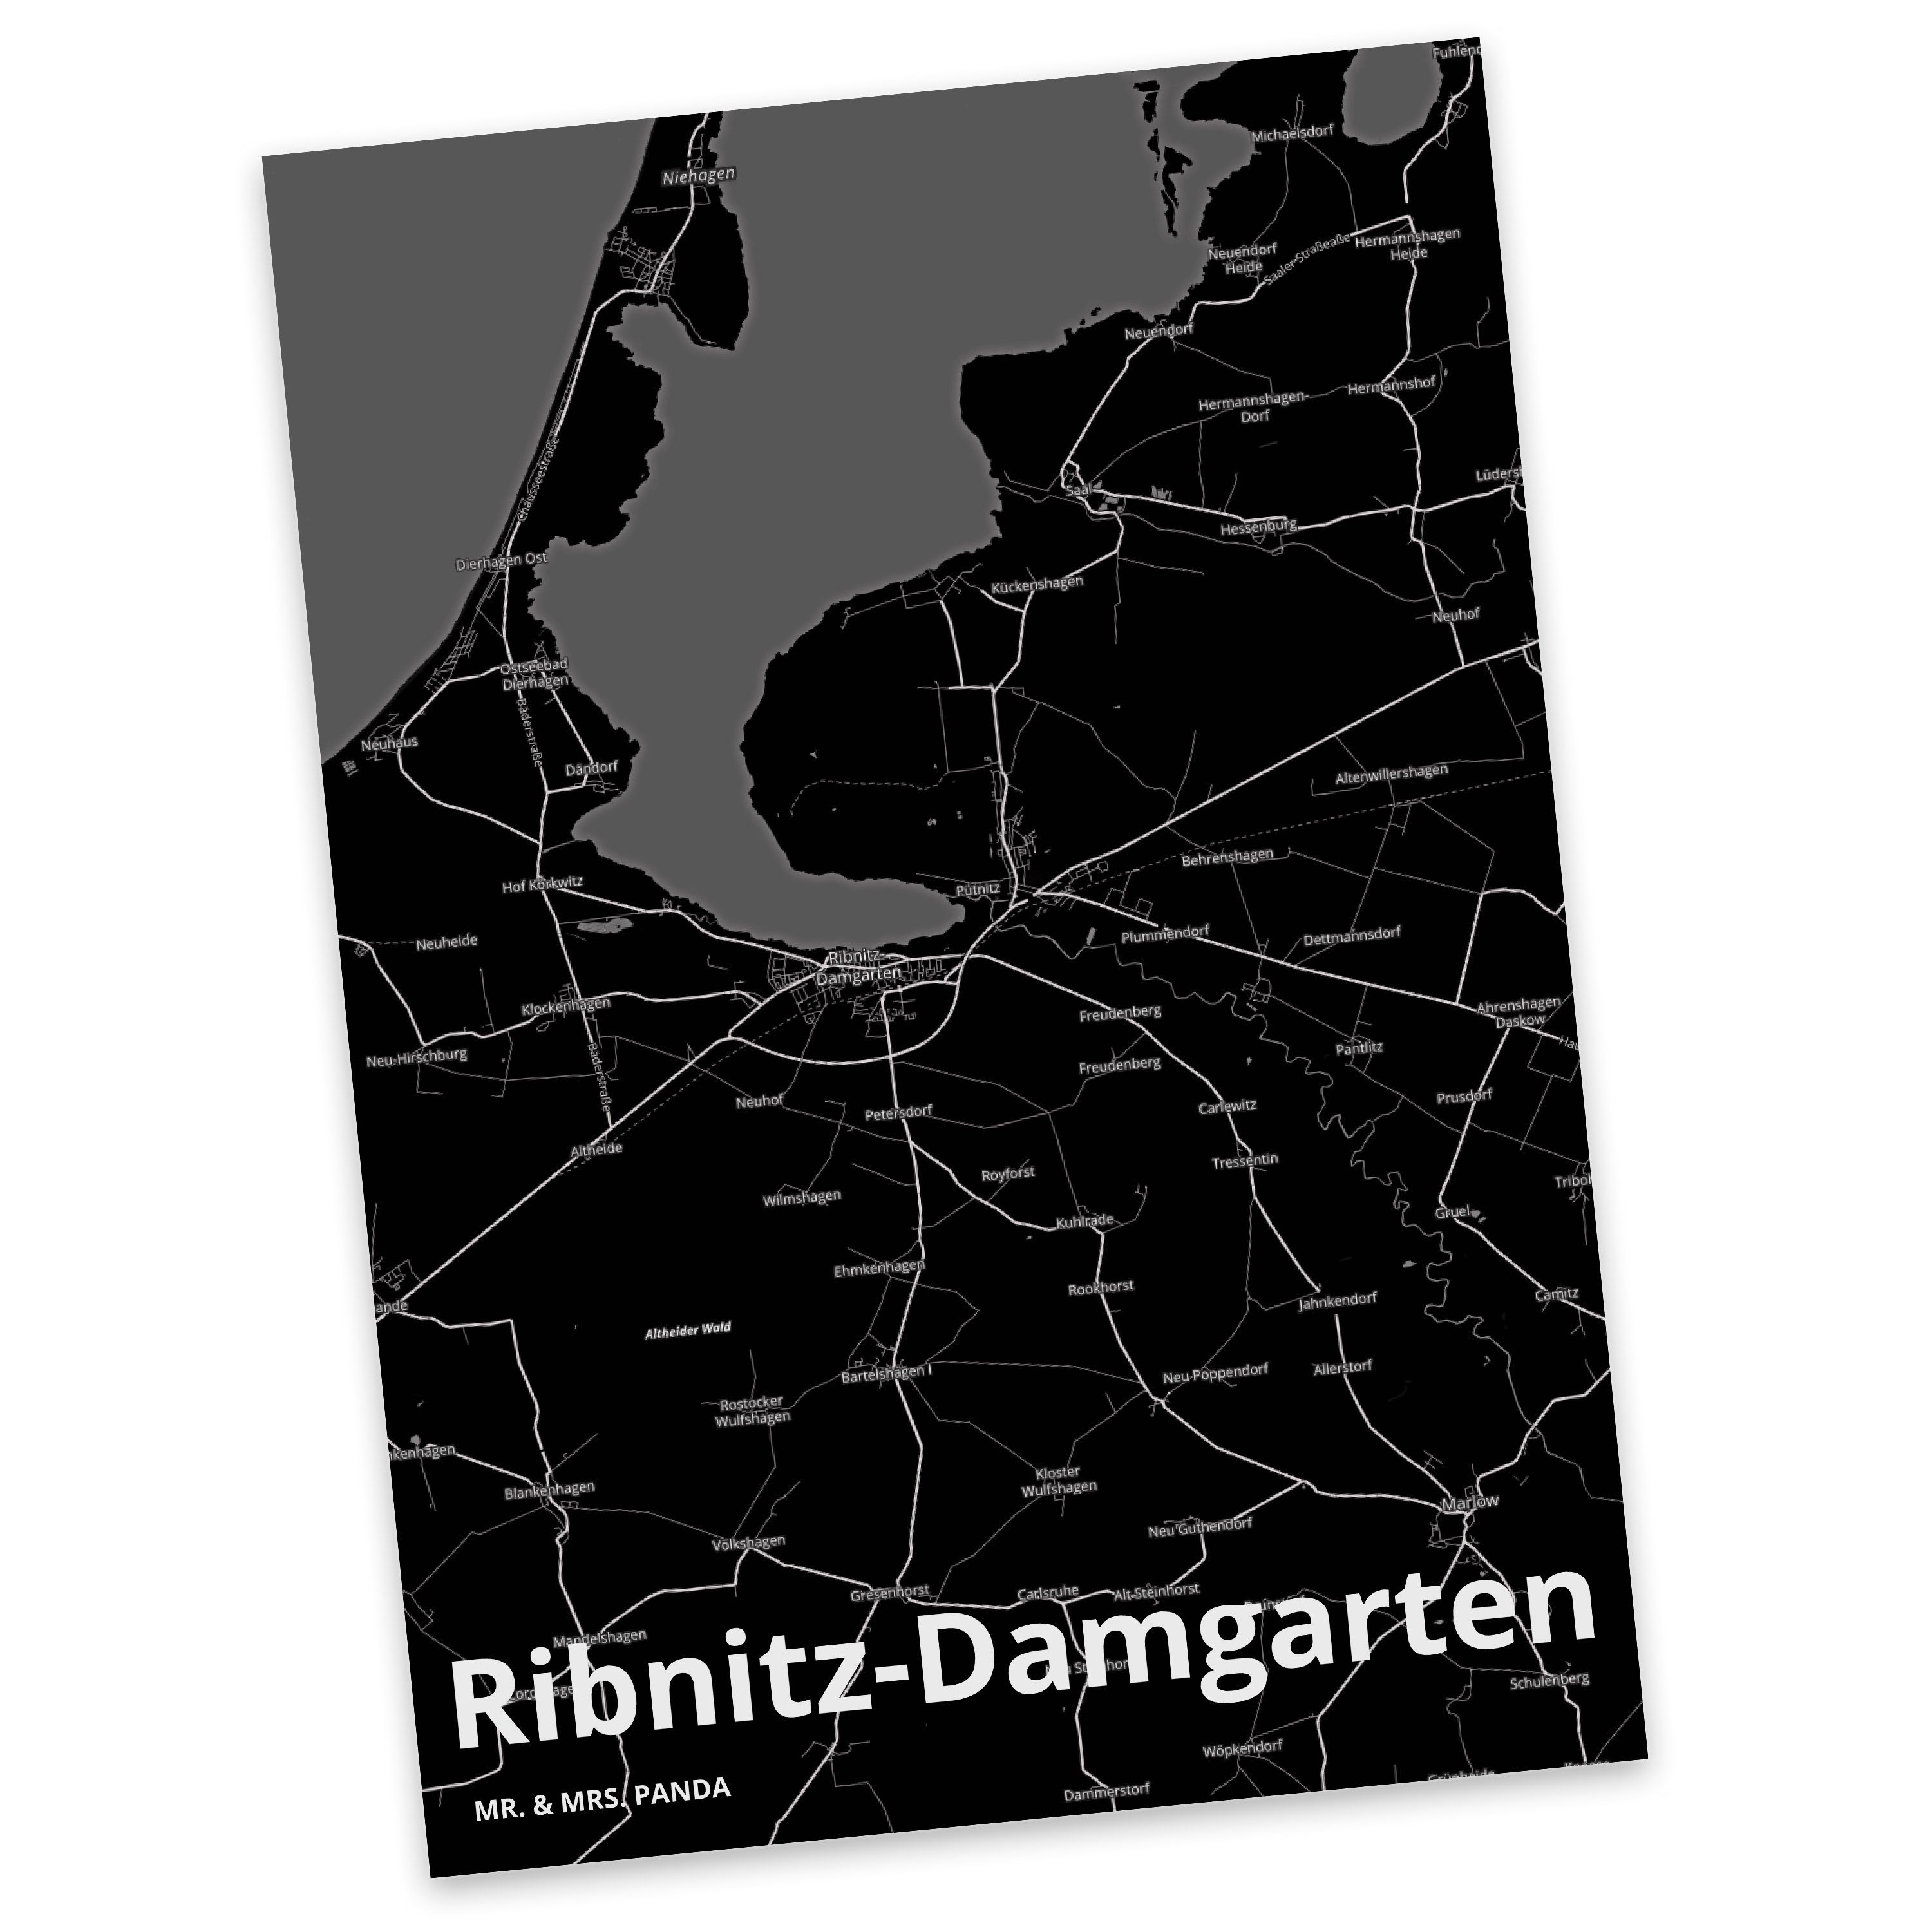 Mr. & Mrs. Panda Postkarte Ribnitz-Damgarten - Geschenk, Grußkarte, Einladung, Geburtstagskarte